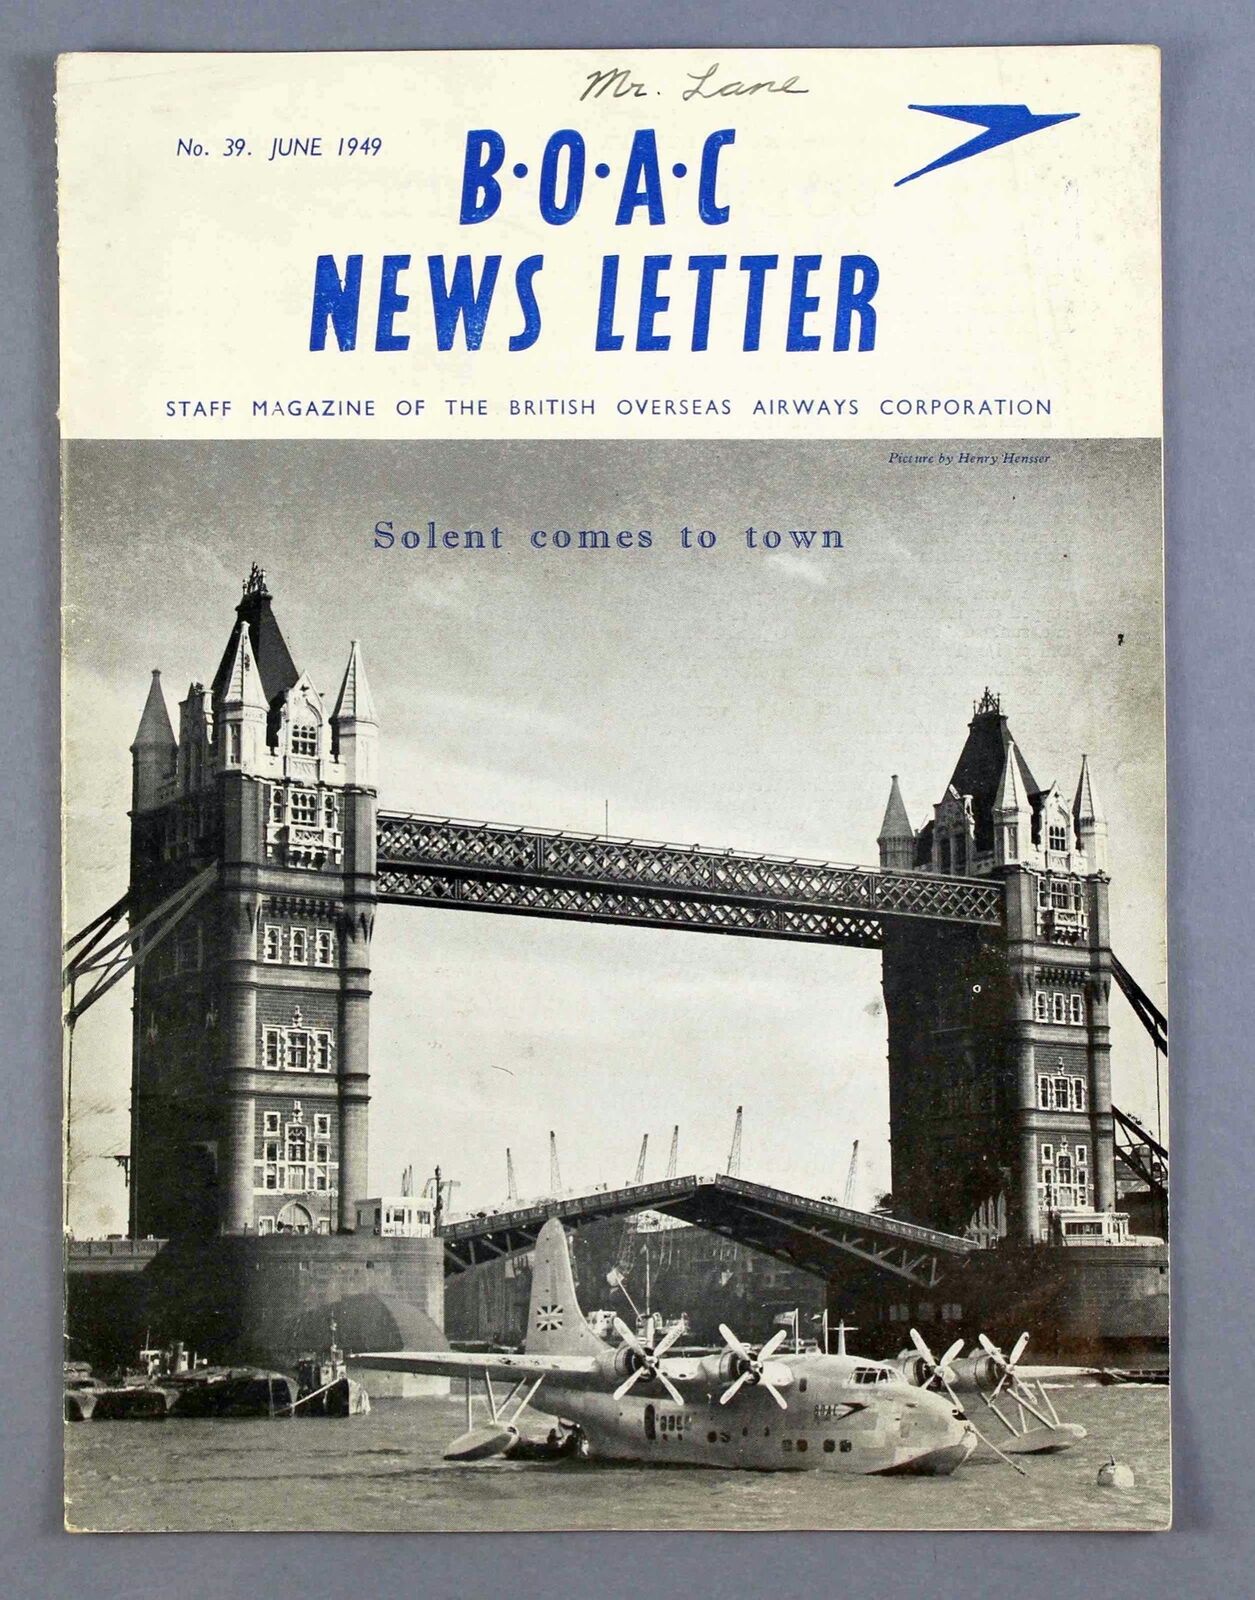 BOAC NEWS LETTER STAFF MAGAZINE JUNE 1949 B.O.A.C. SOLENT FLYING BOAT LONDON